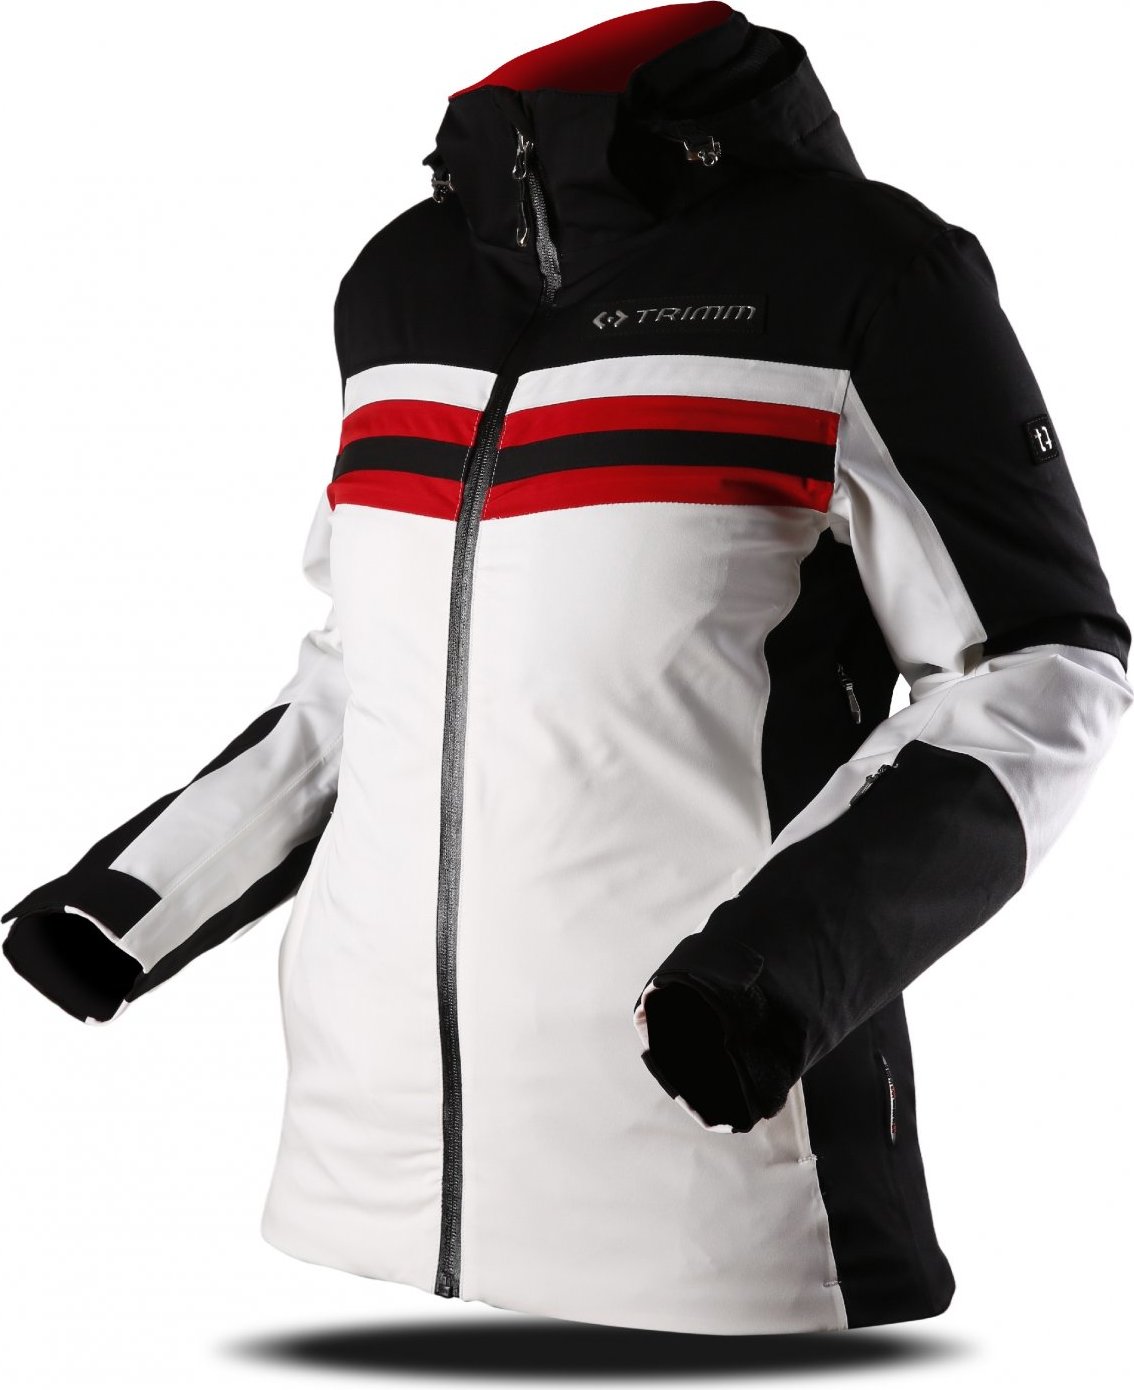 Dámská lyžařská bunda TRIMM Ilusion bílá Velikost: L, Barva: white/red/black